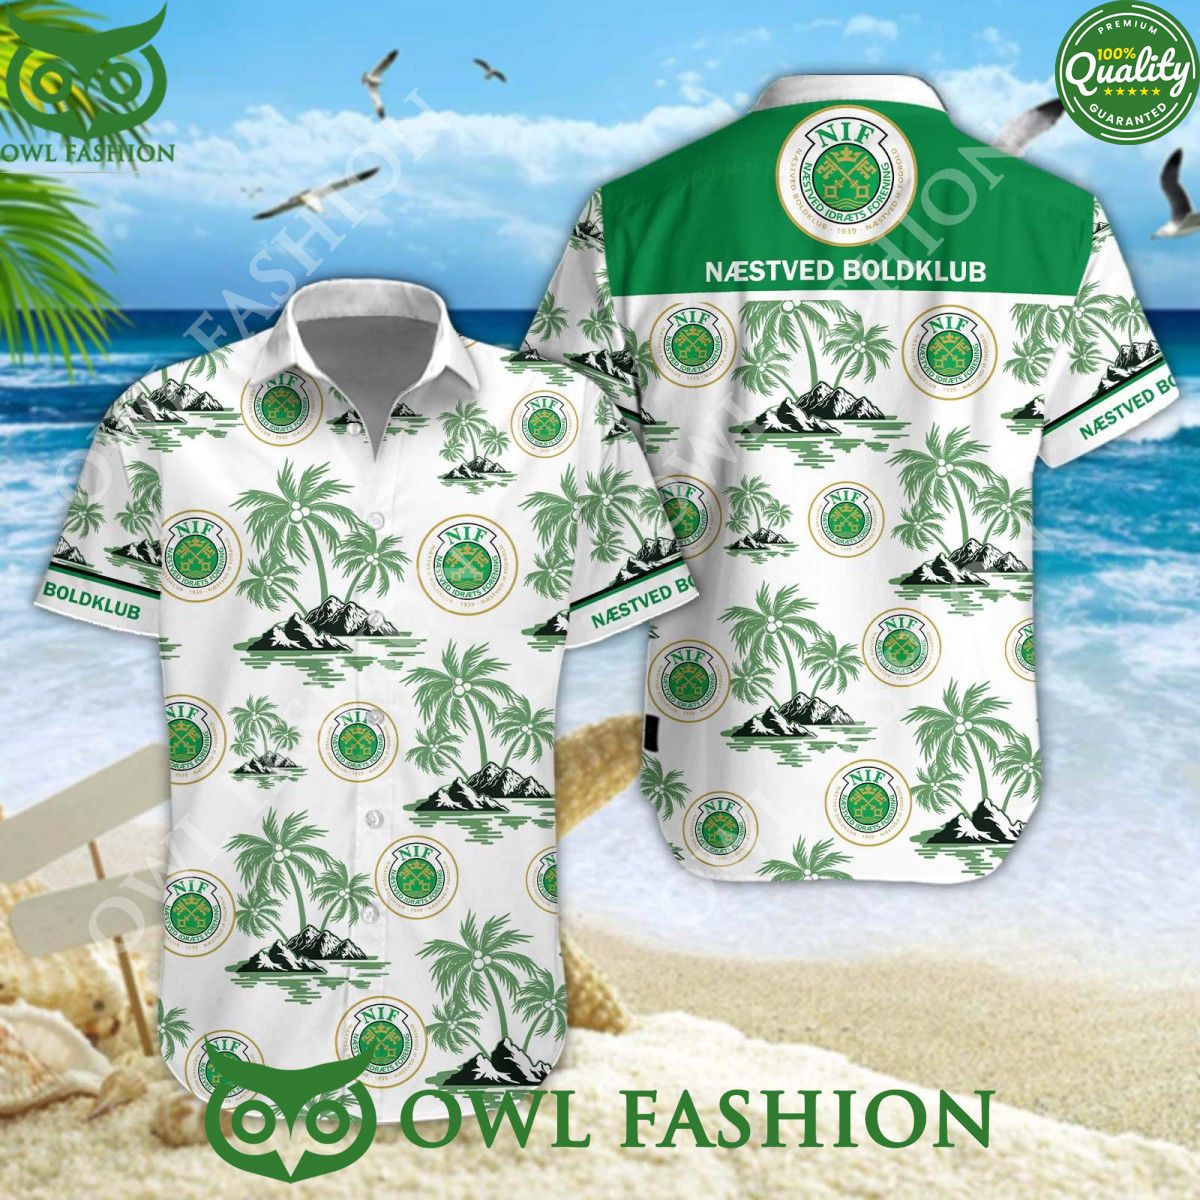 nestved boldklub danish association football team coconut island hawaiian shirt 1 O9ust.jpg